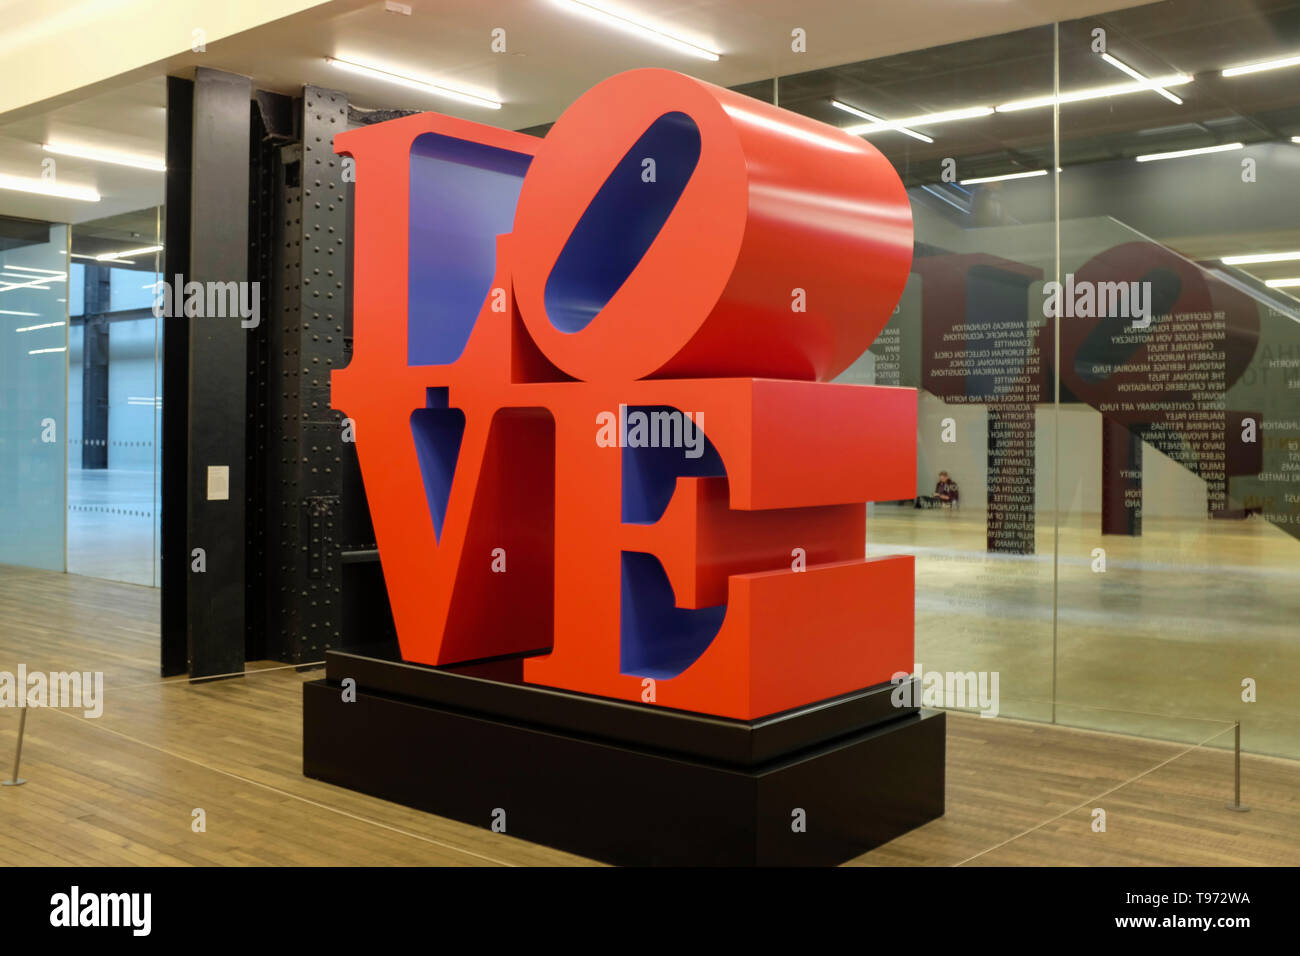 'Love' Sculpture by artist Robert Indiana, Tate Modern, London. Stock Photo